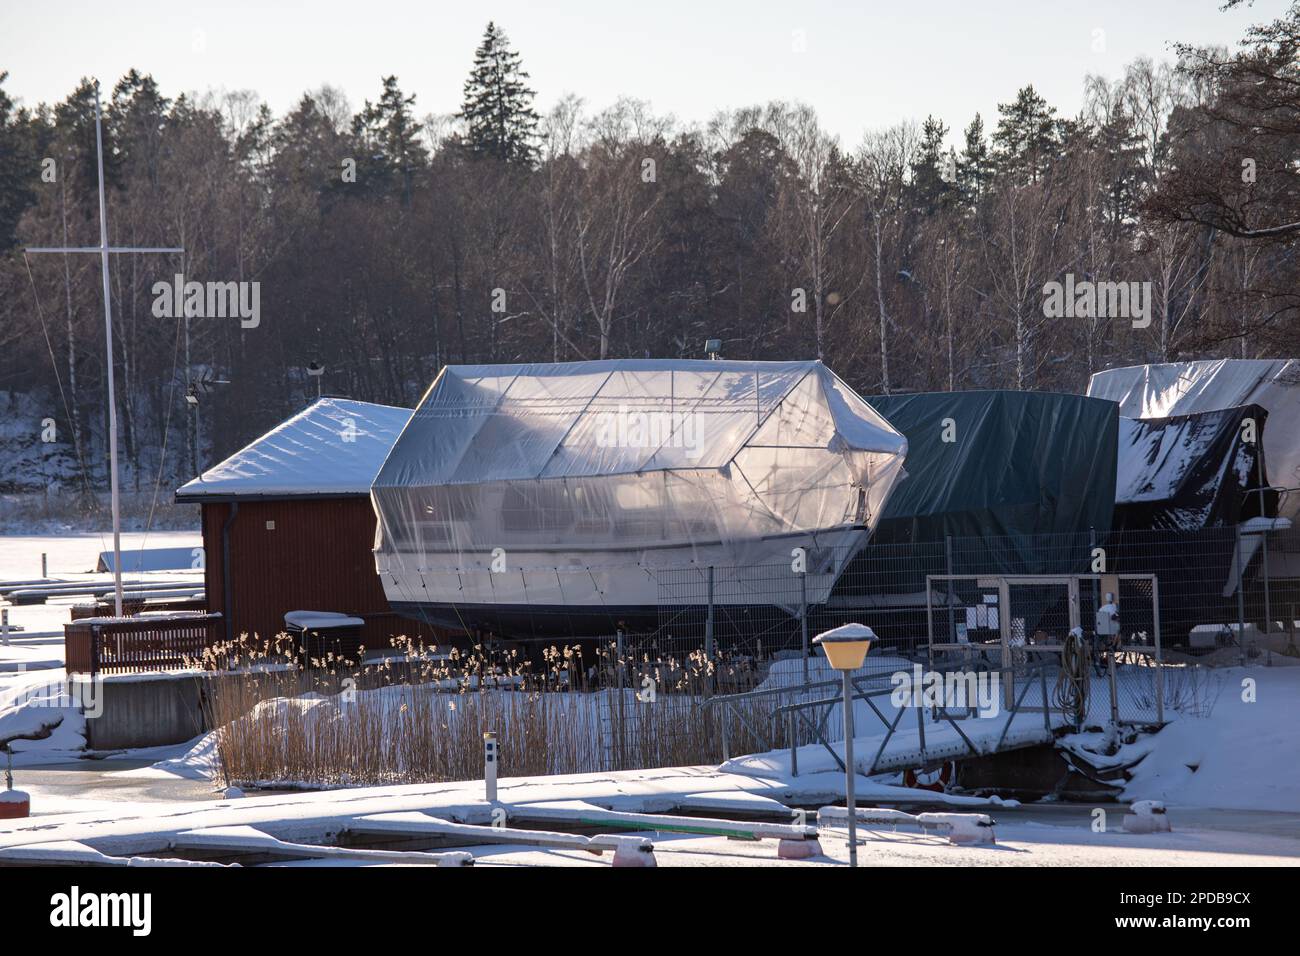 Plastic tarp covered boats on winter storage at Munkan venekerho in Munkkiniemi district of Helsinki, Finland Stock Photo